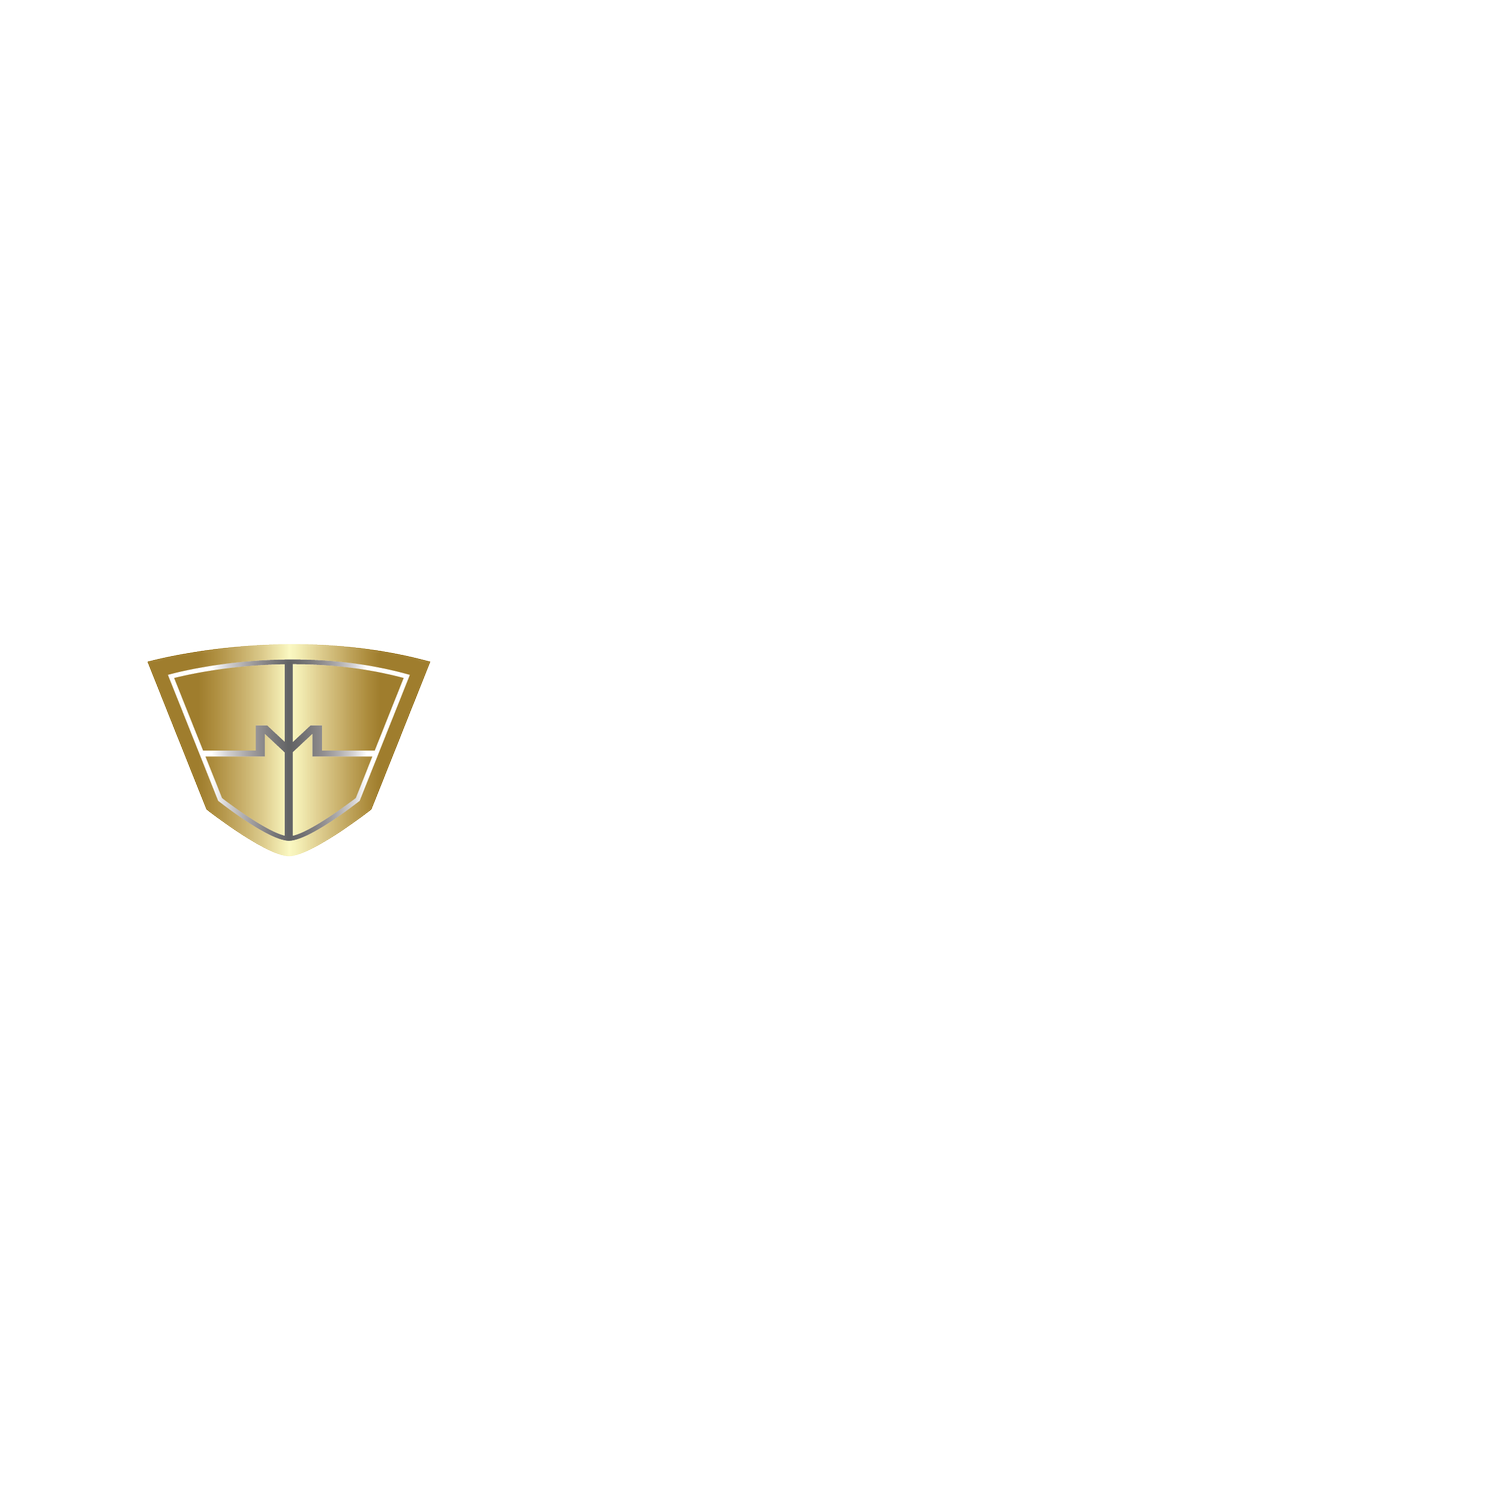 Maximus Partners